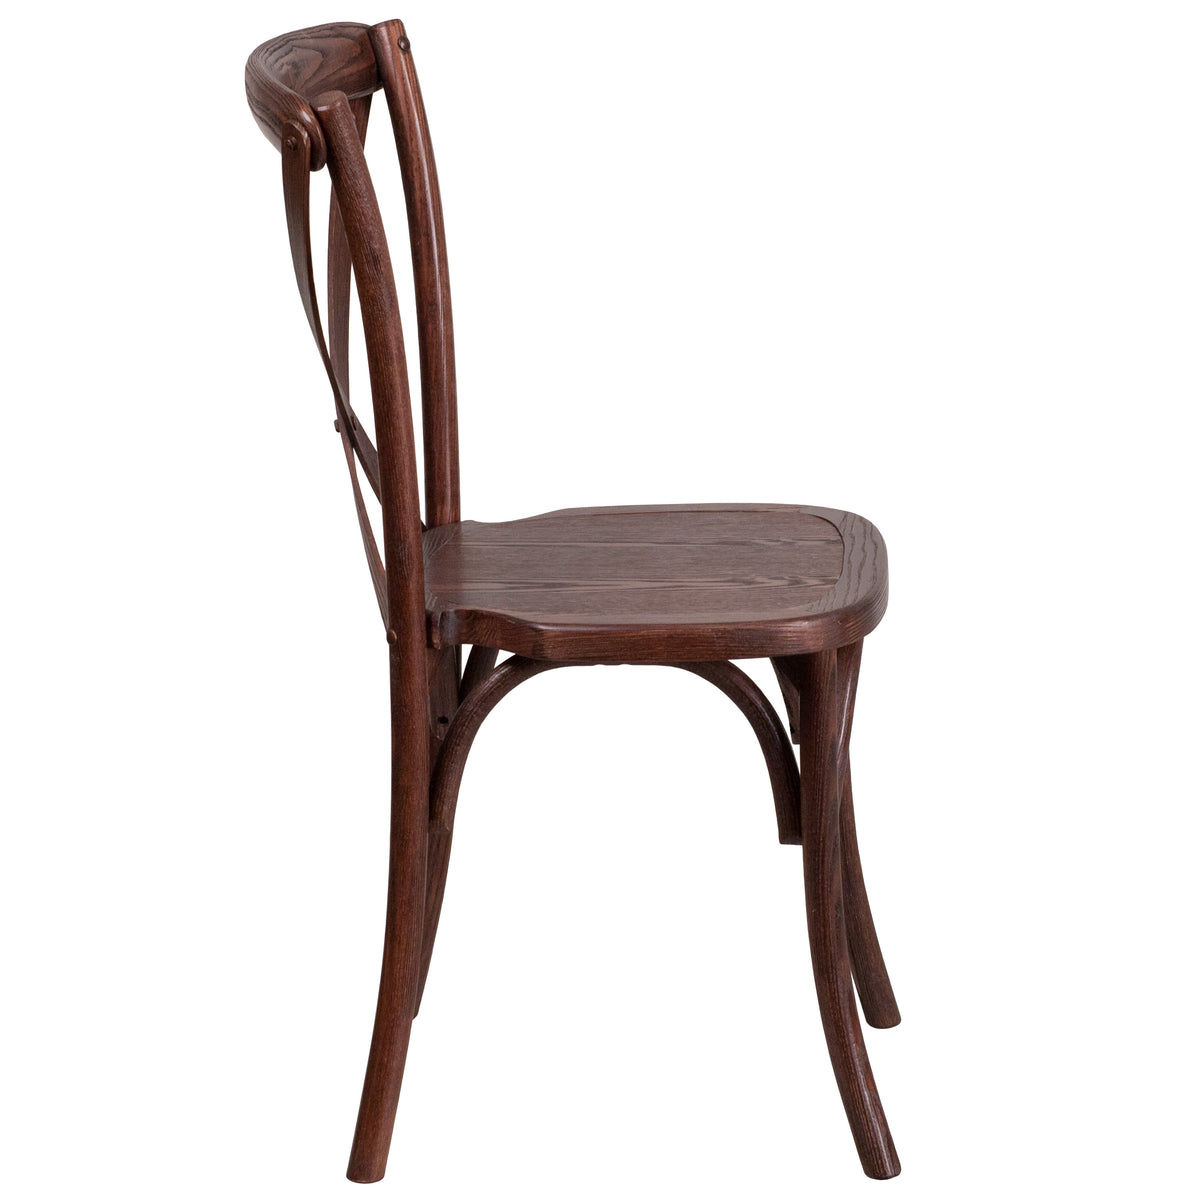 Mahogany |#| Stackable Mahogany Wood Cross Back Chair - Dining Room Seating